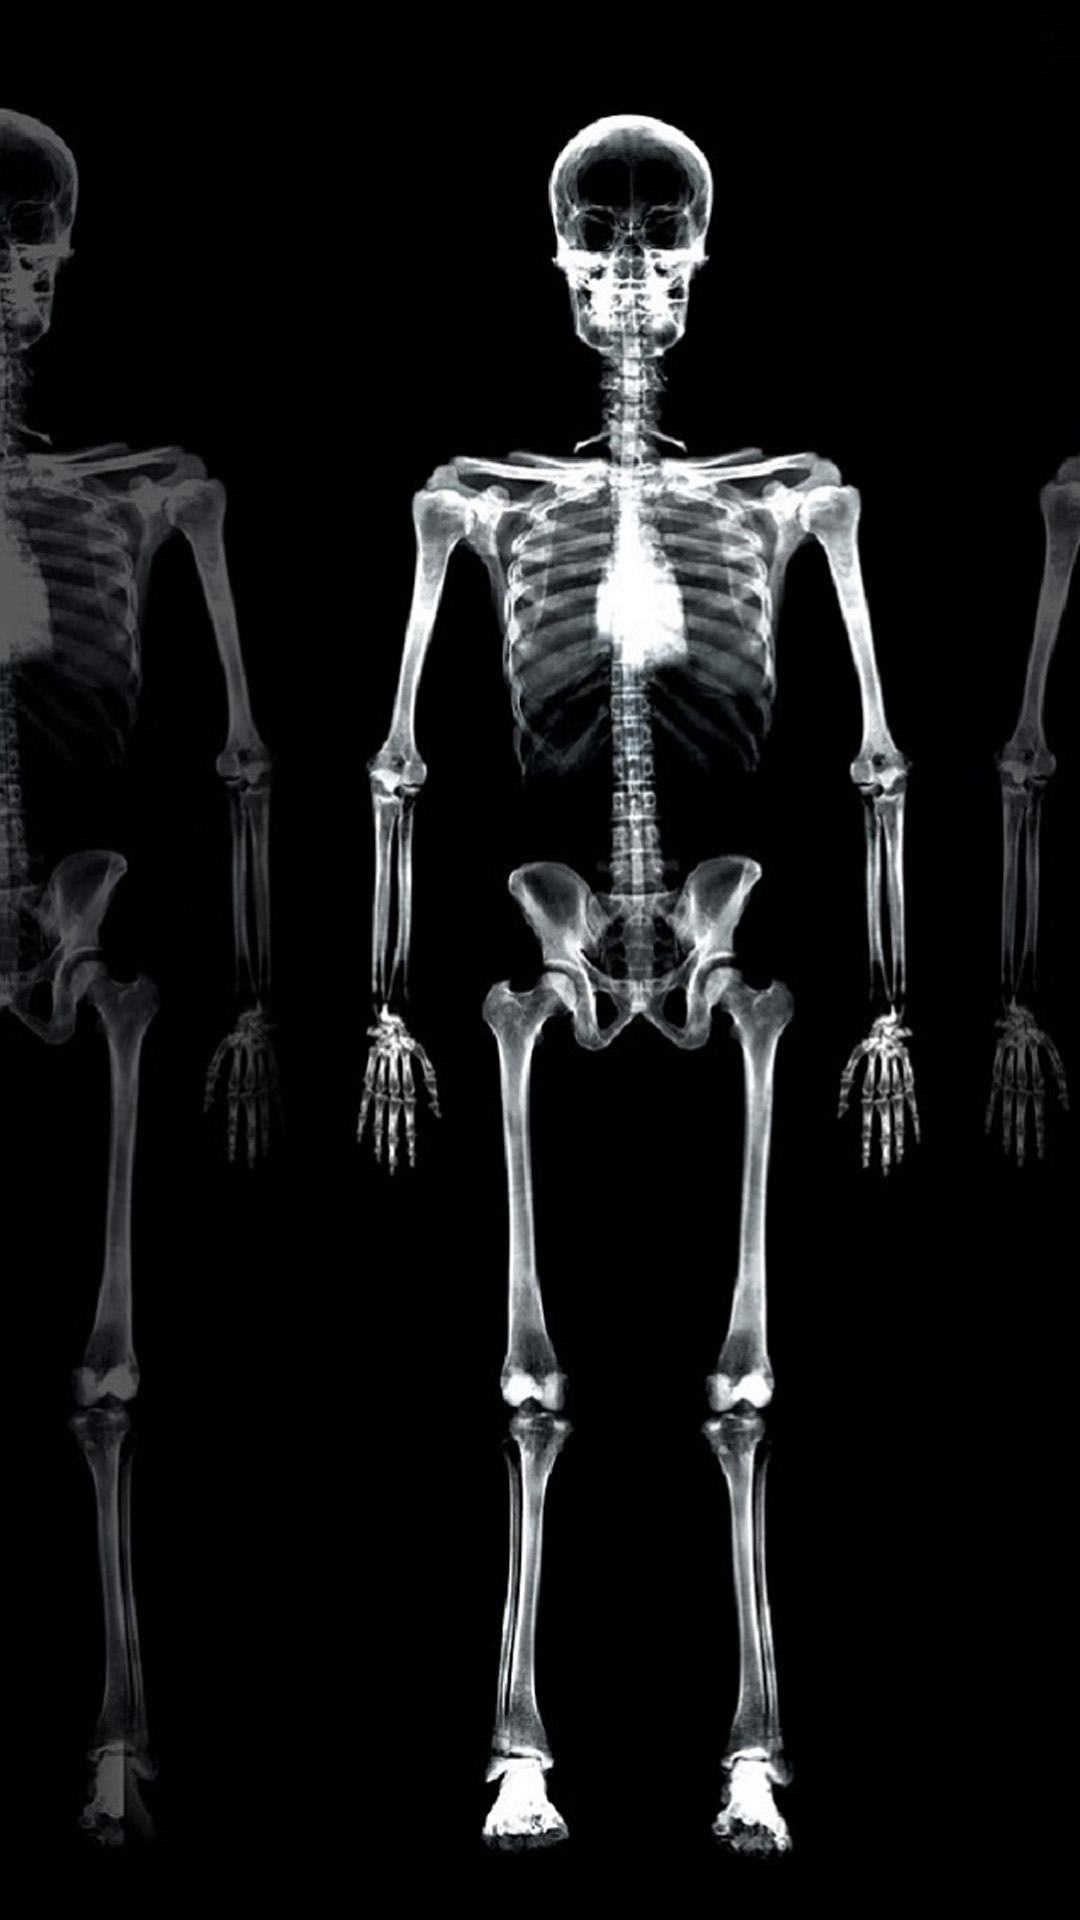 Skeleton Scan Android wallpaper